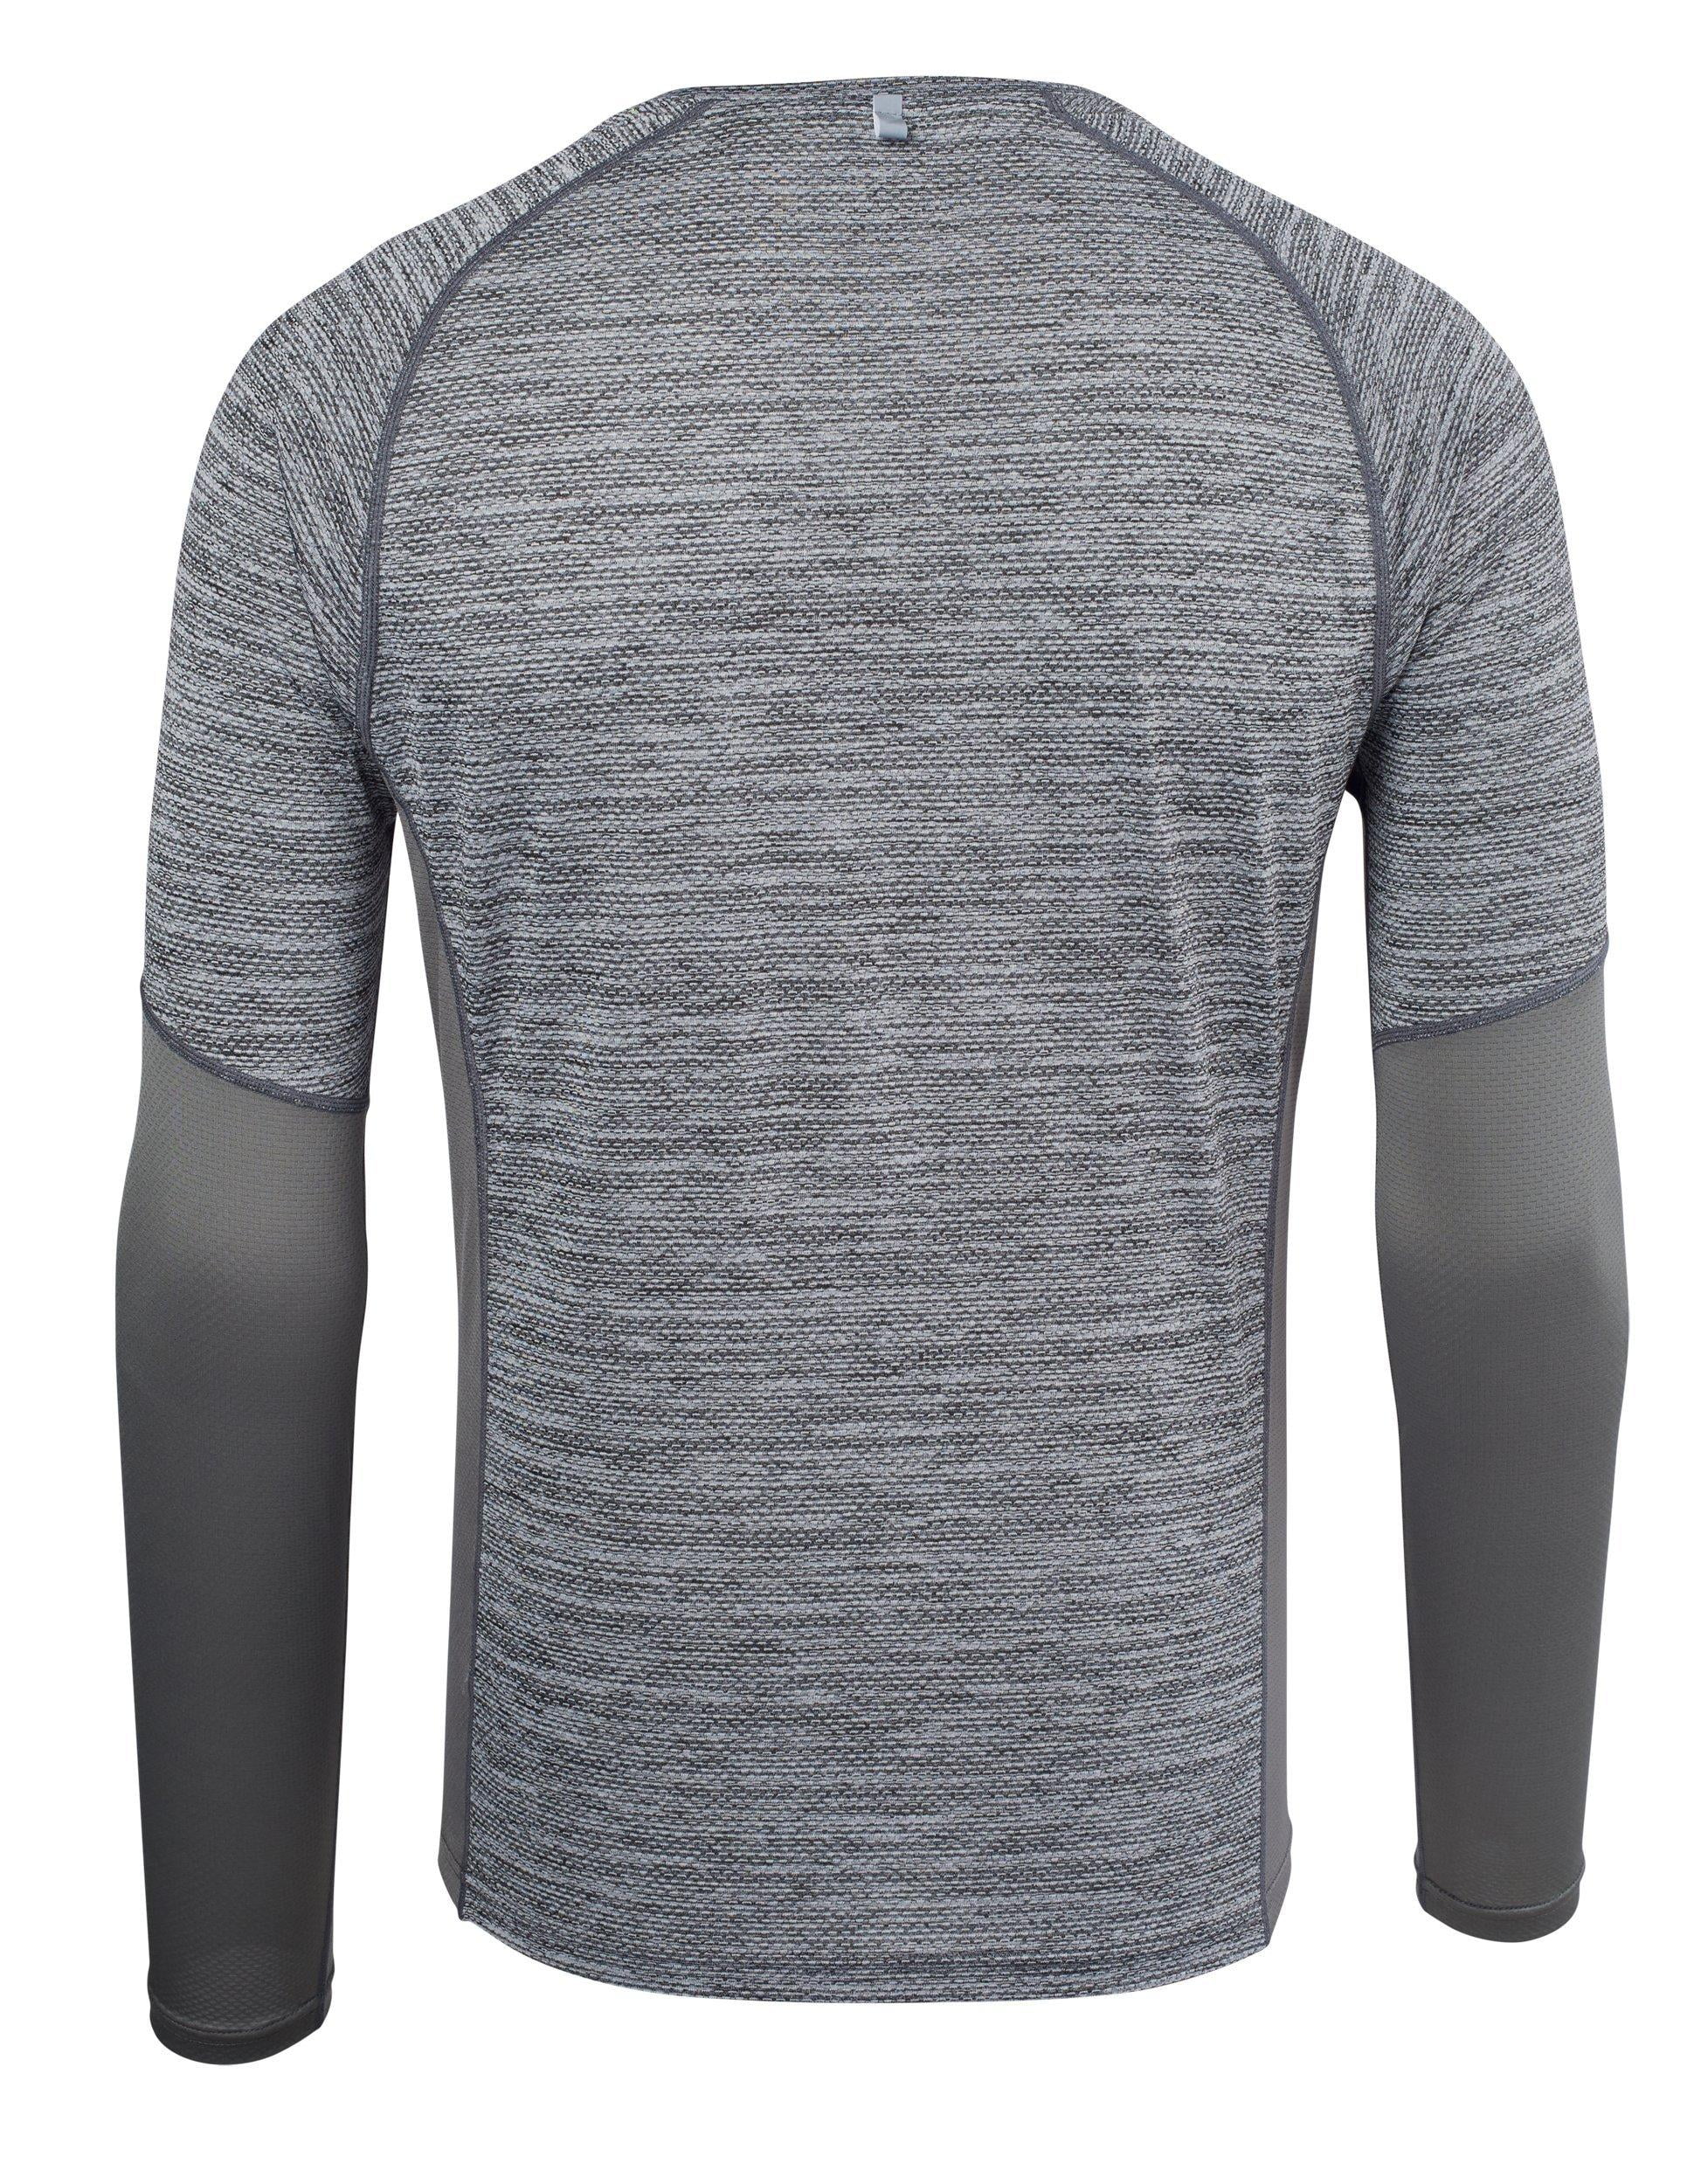 Mizuno Men's Alpha Long Sleeve Running Shirt, Size Large, Black-Lunar (9097) Walmart.com